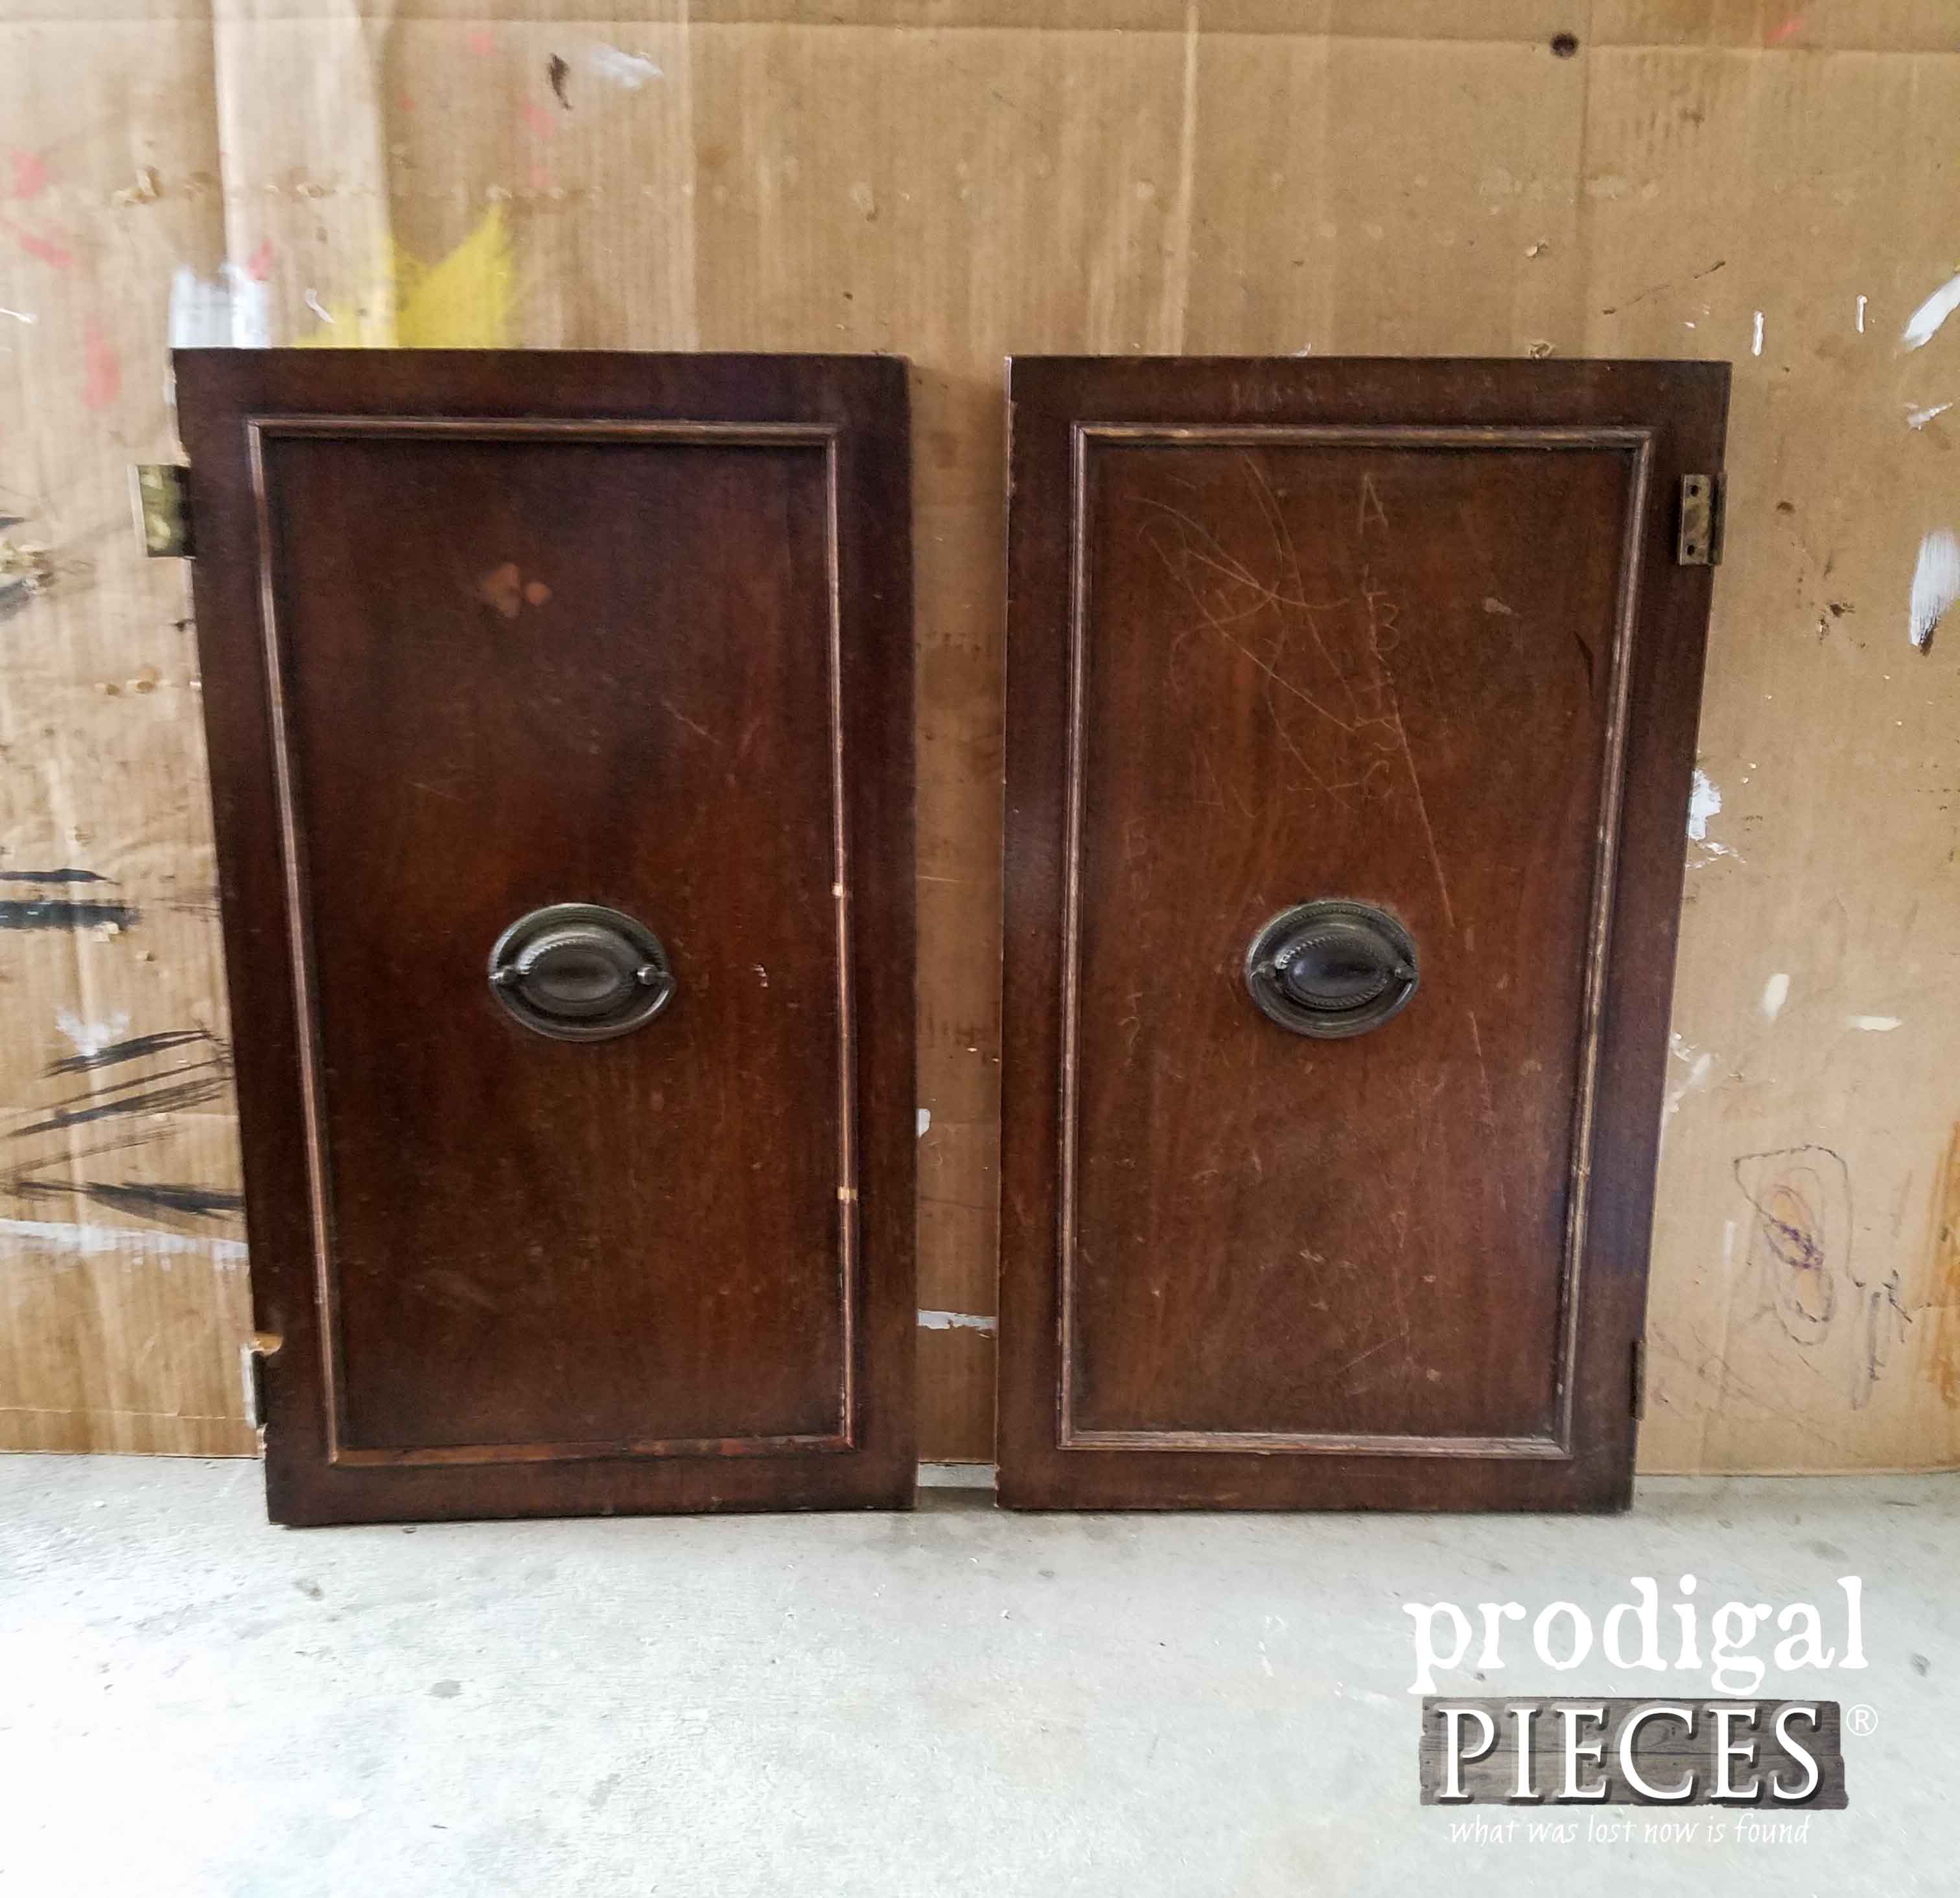 Cupboard Doors Before Repurposing | Prodigal Pieces | prodigalpieces.com